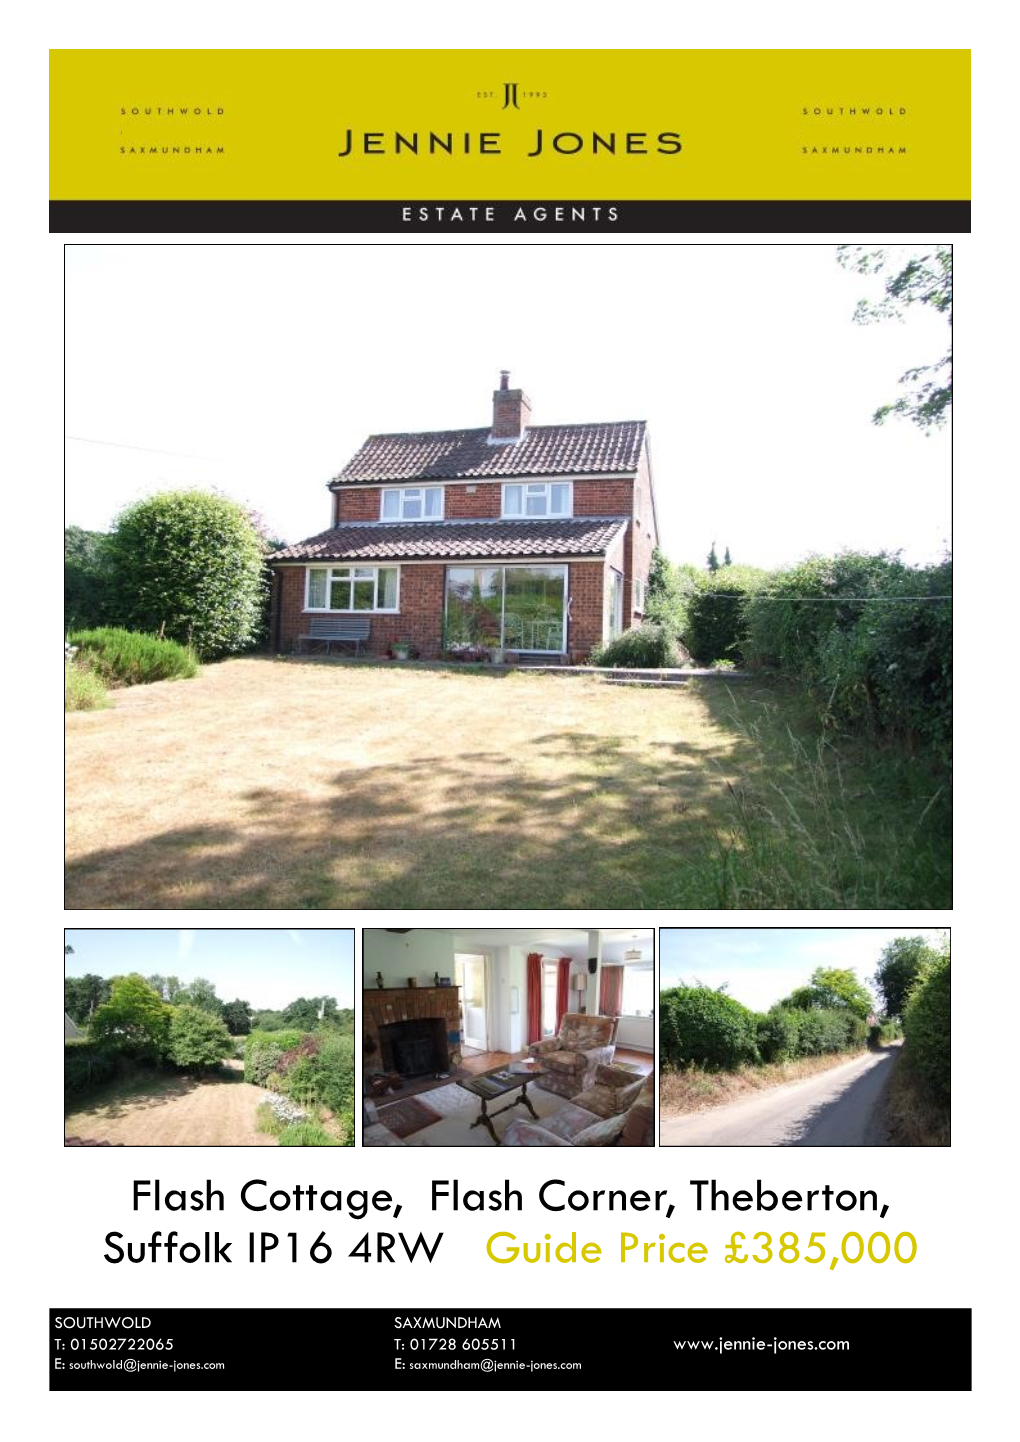 Flash Cottage, Flash Corner, Theberton, Suffolk IP16 4RW Guide Price £385,000